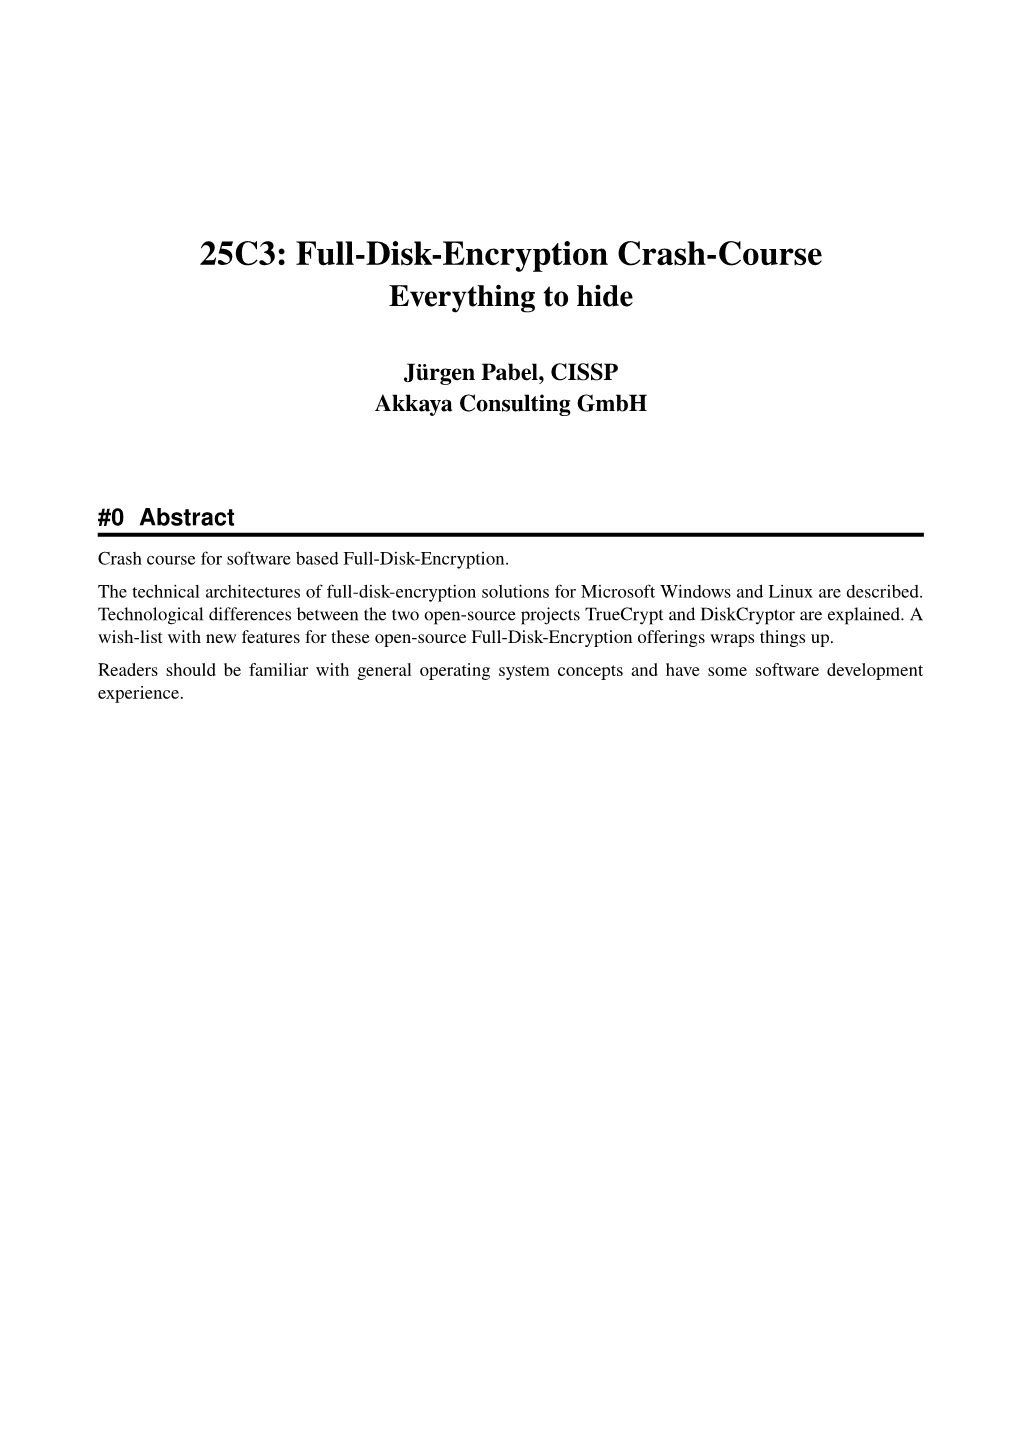 Full-Disk-Encryption Crash-Course